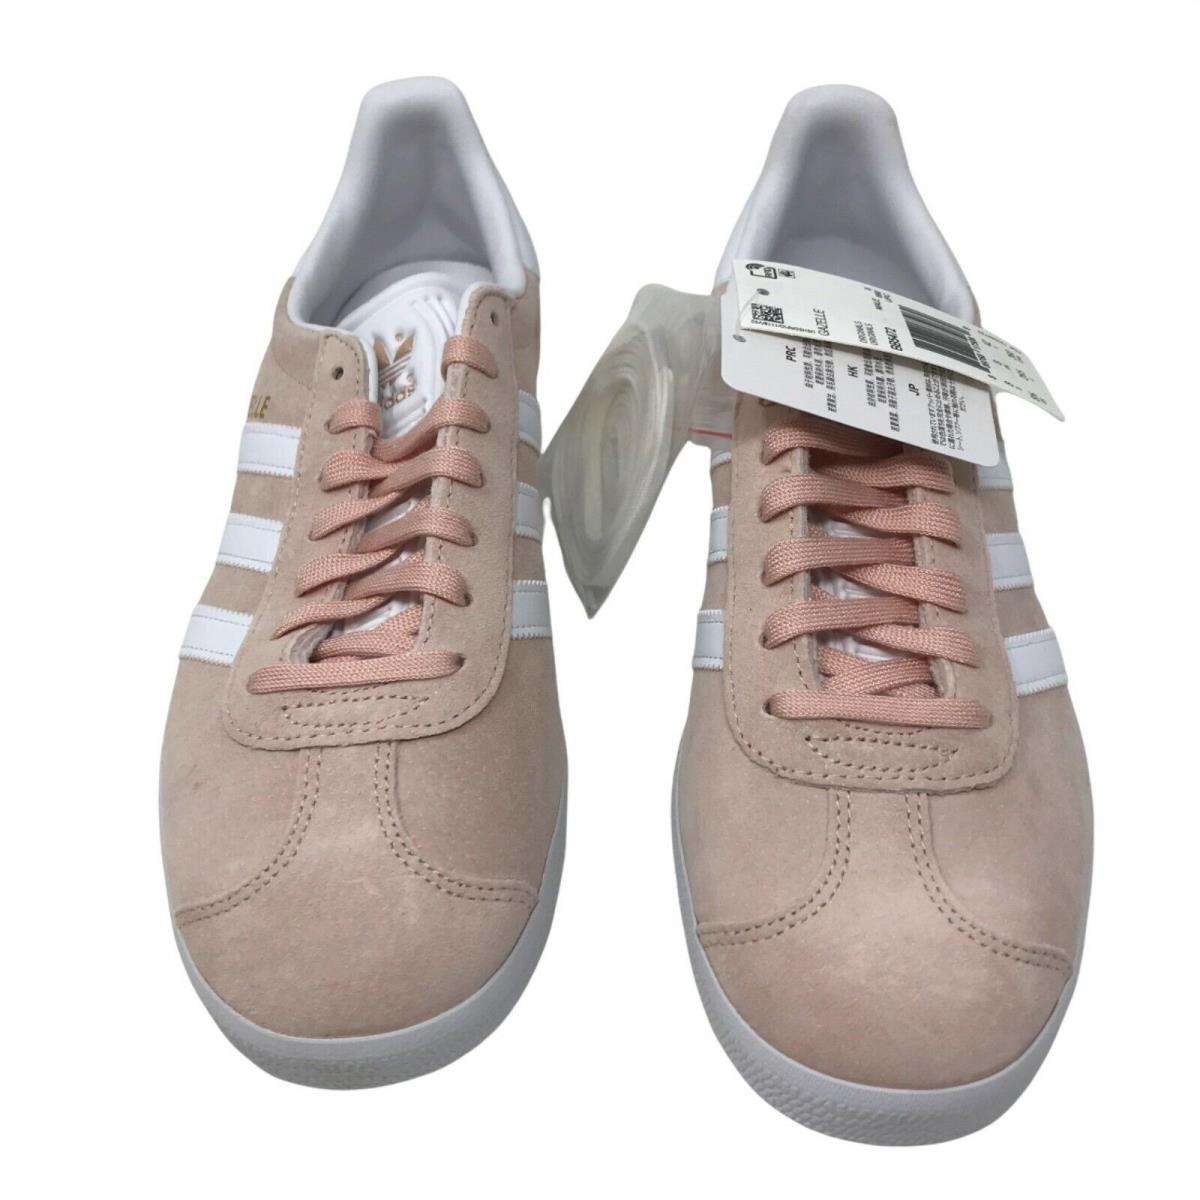 Adidas Men`s Gazelle Sneakers Size 9 - Pink/White